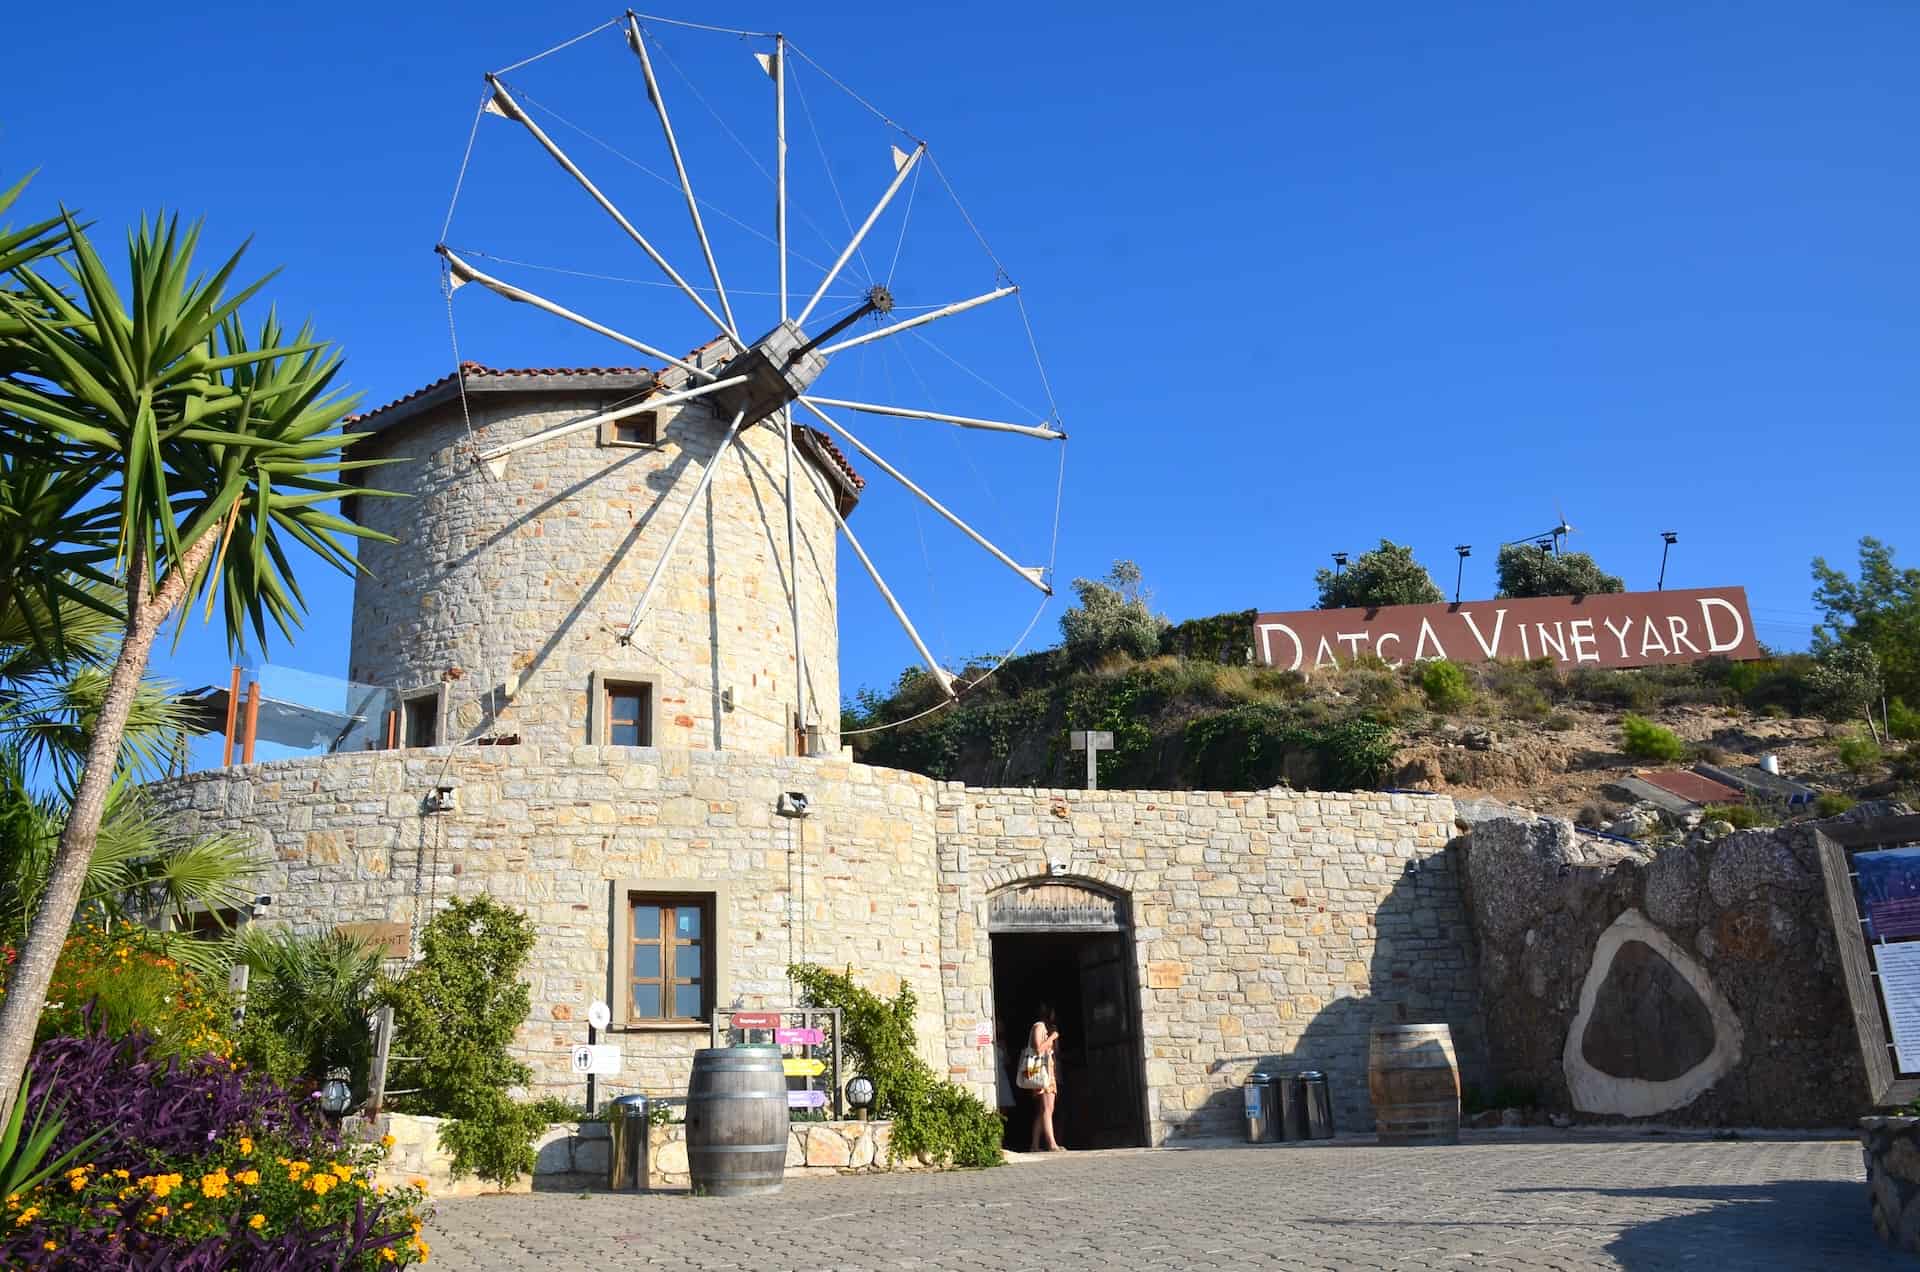 Datça Vineyard on the Datça Peninsula in Turkey